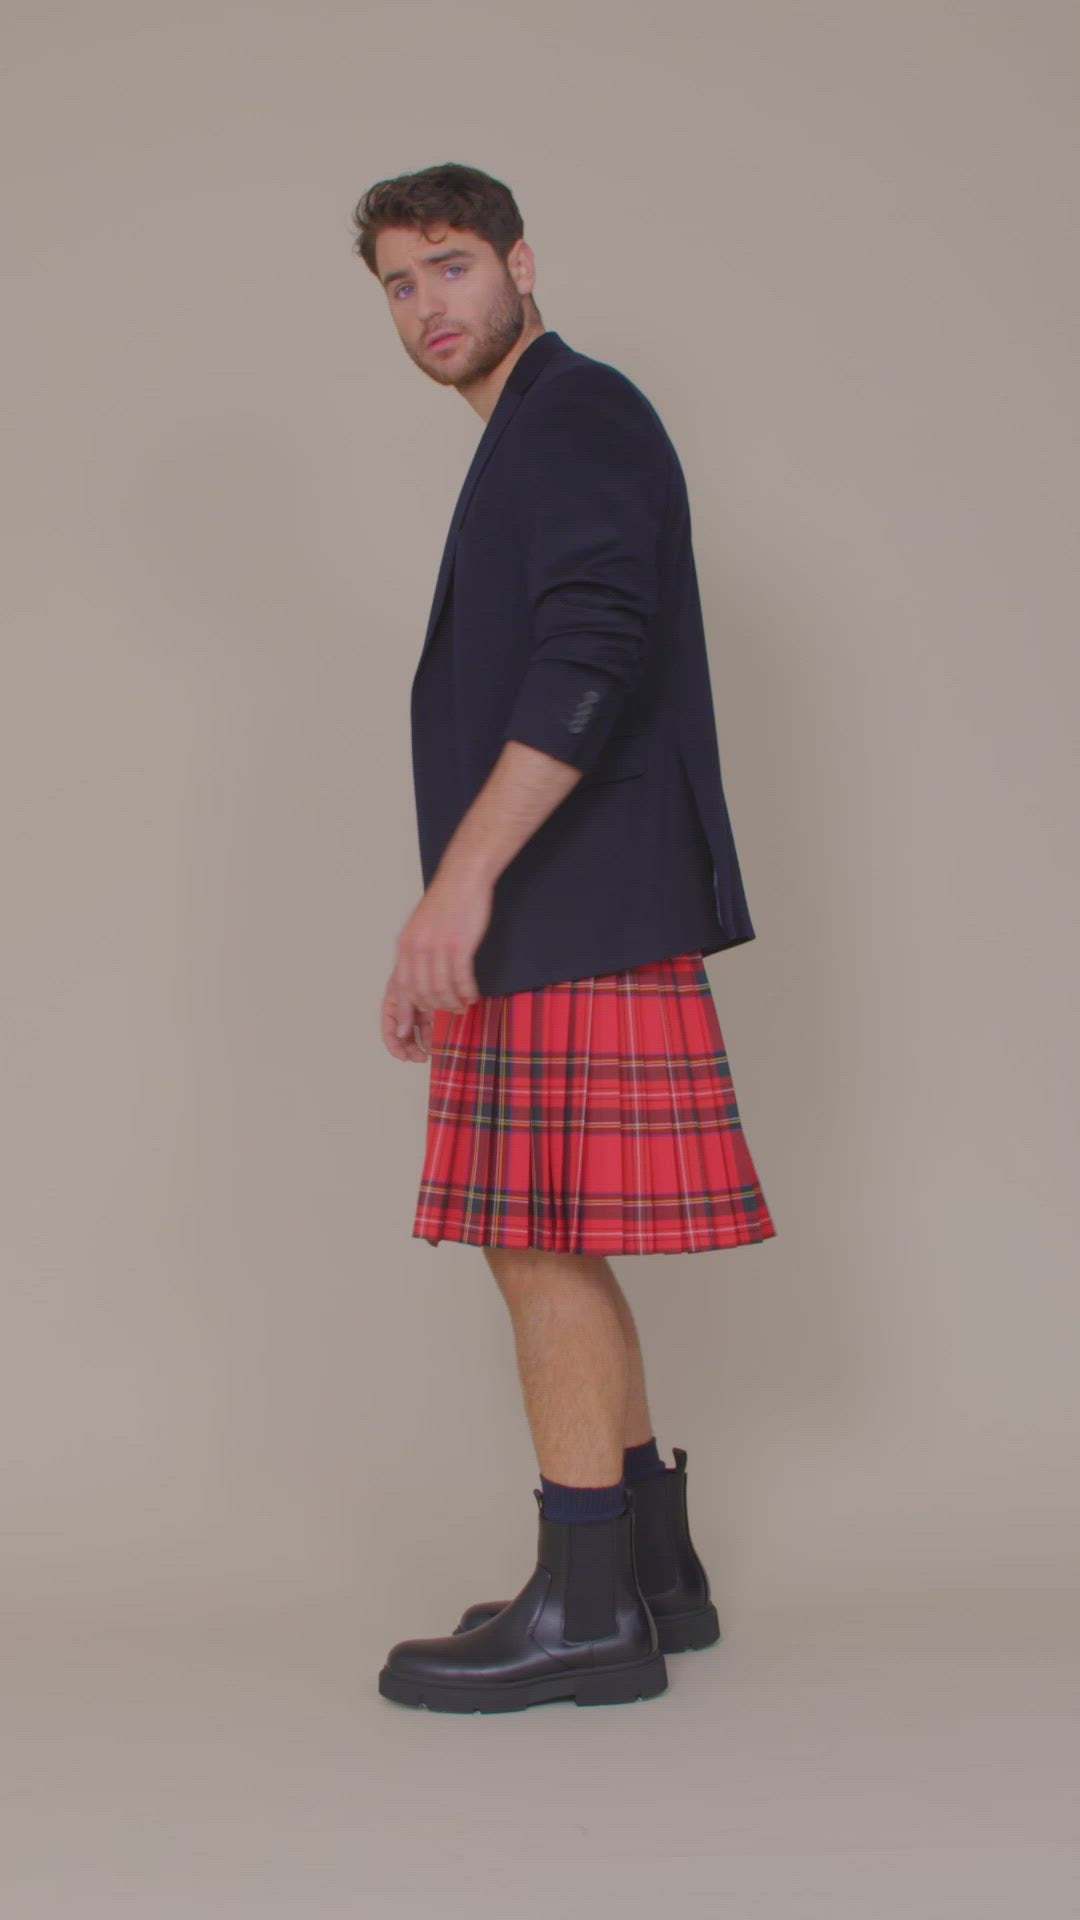 Comprar Stewart Dress Men's Tartan Kilt - Kilts para Hombre 017